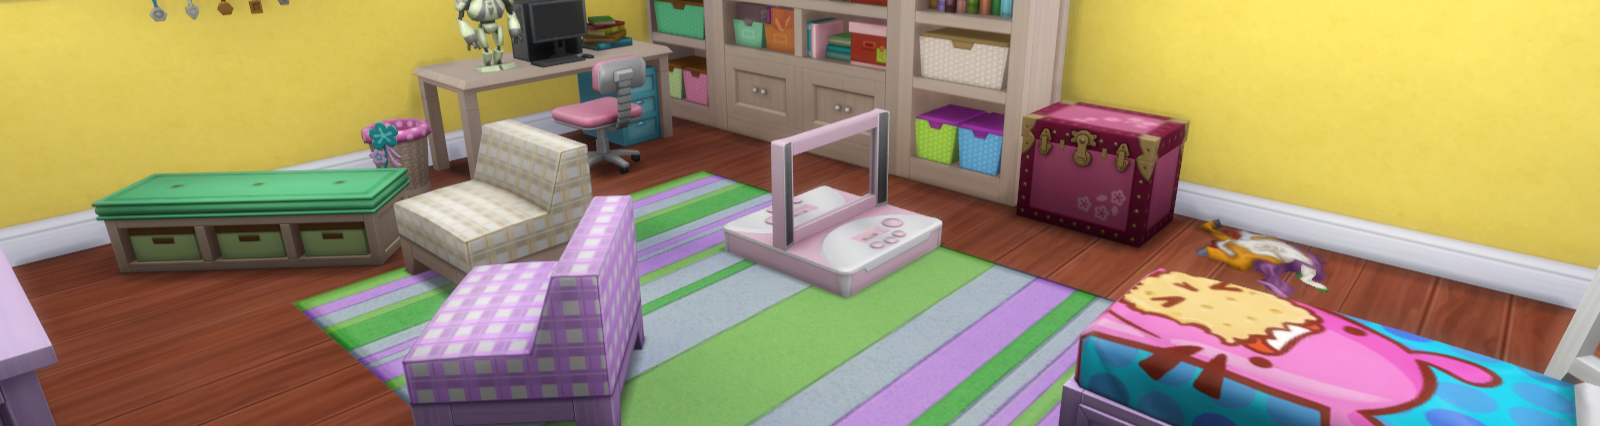 The Sims 4 - Kids Room Stuff DLC Origin CD Key bg